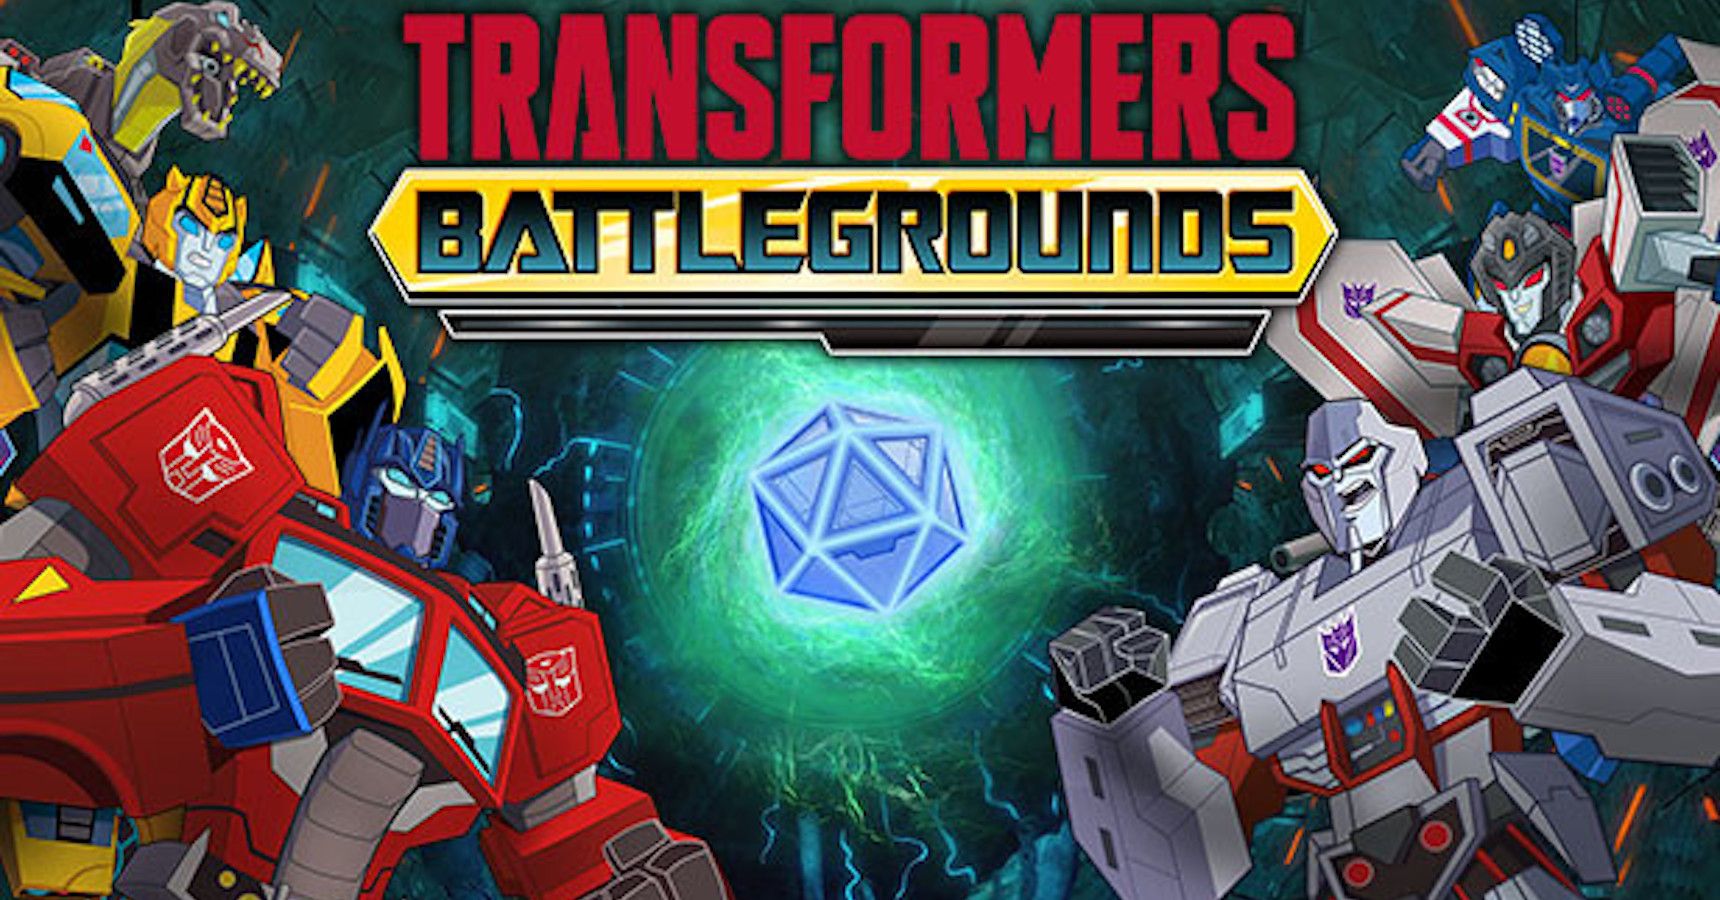 transformers tv series download